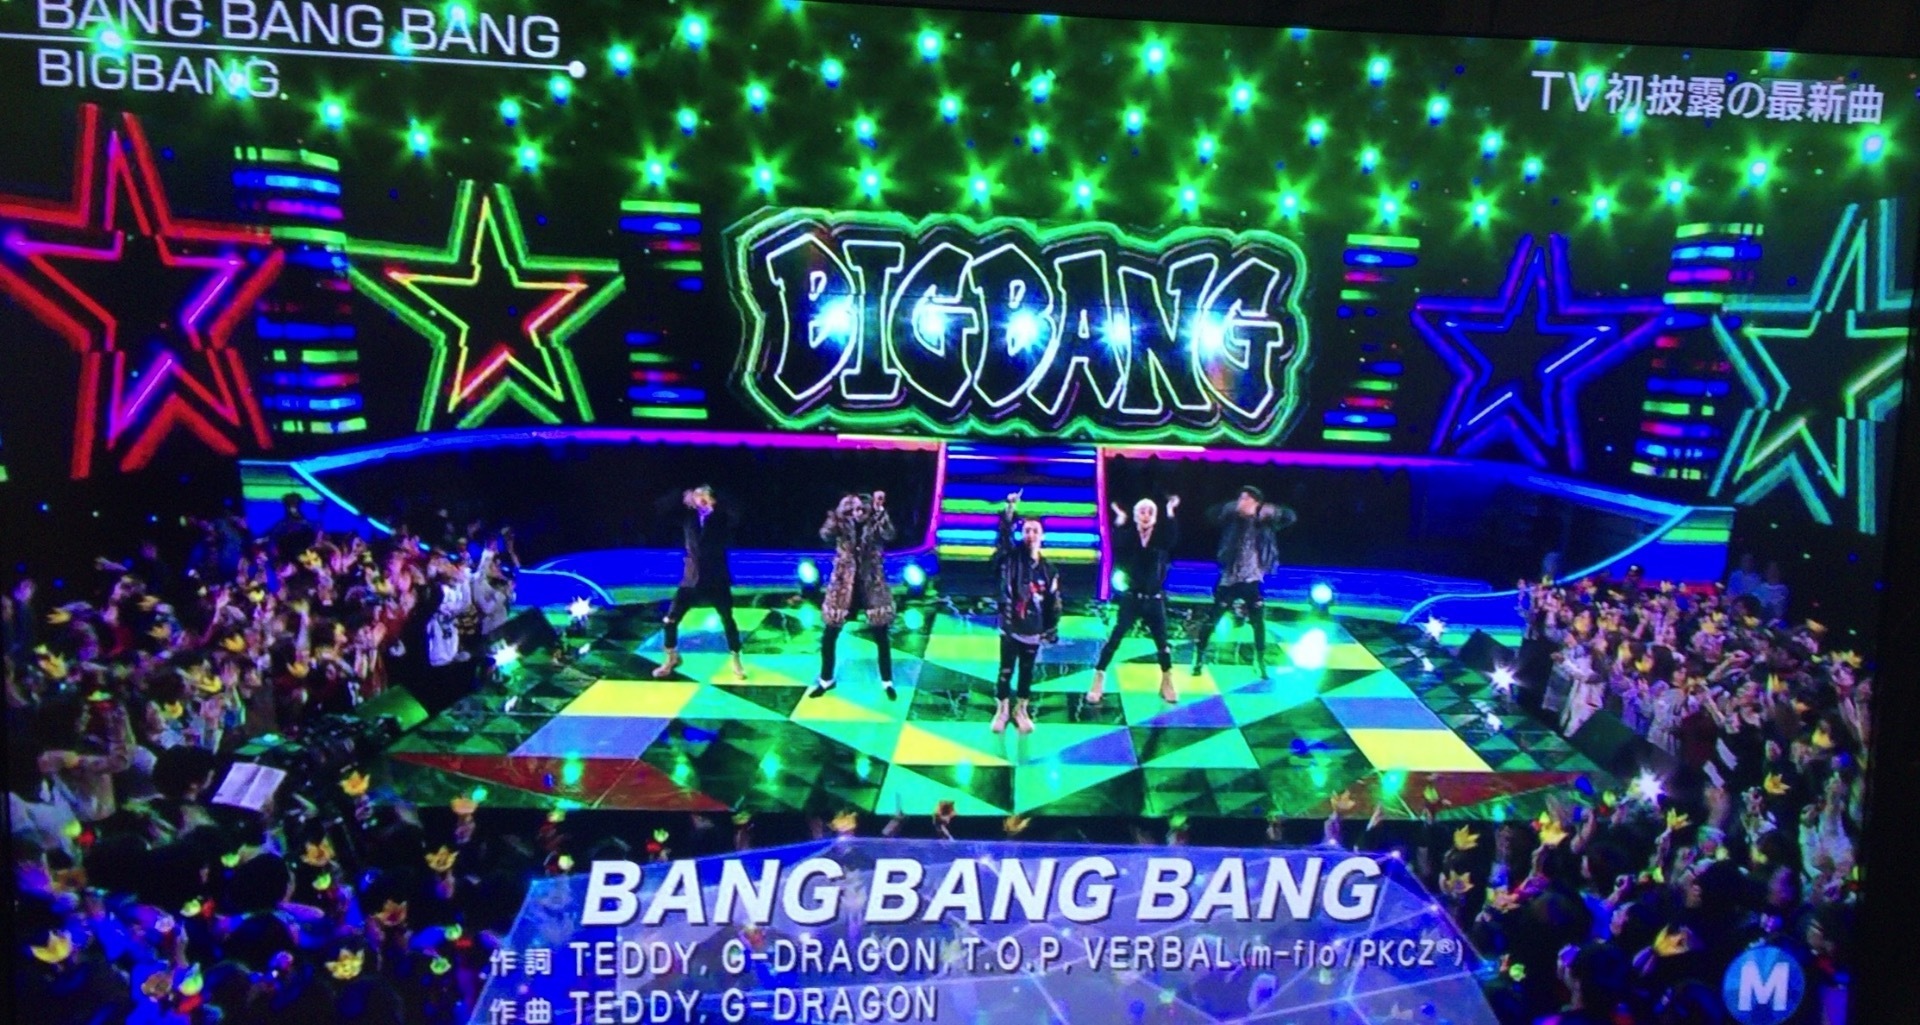 Bigbang Mステ 動画 2 5 Bangbangbang Bigbangスンリと ごぼう天うどん